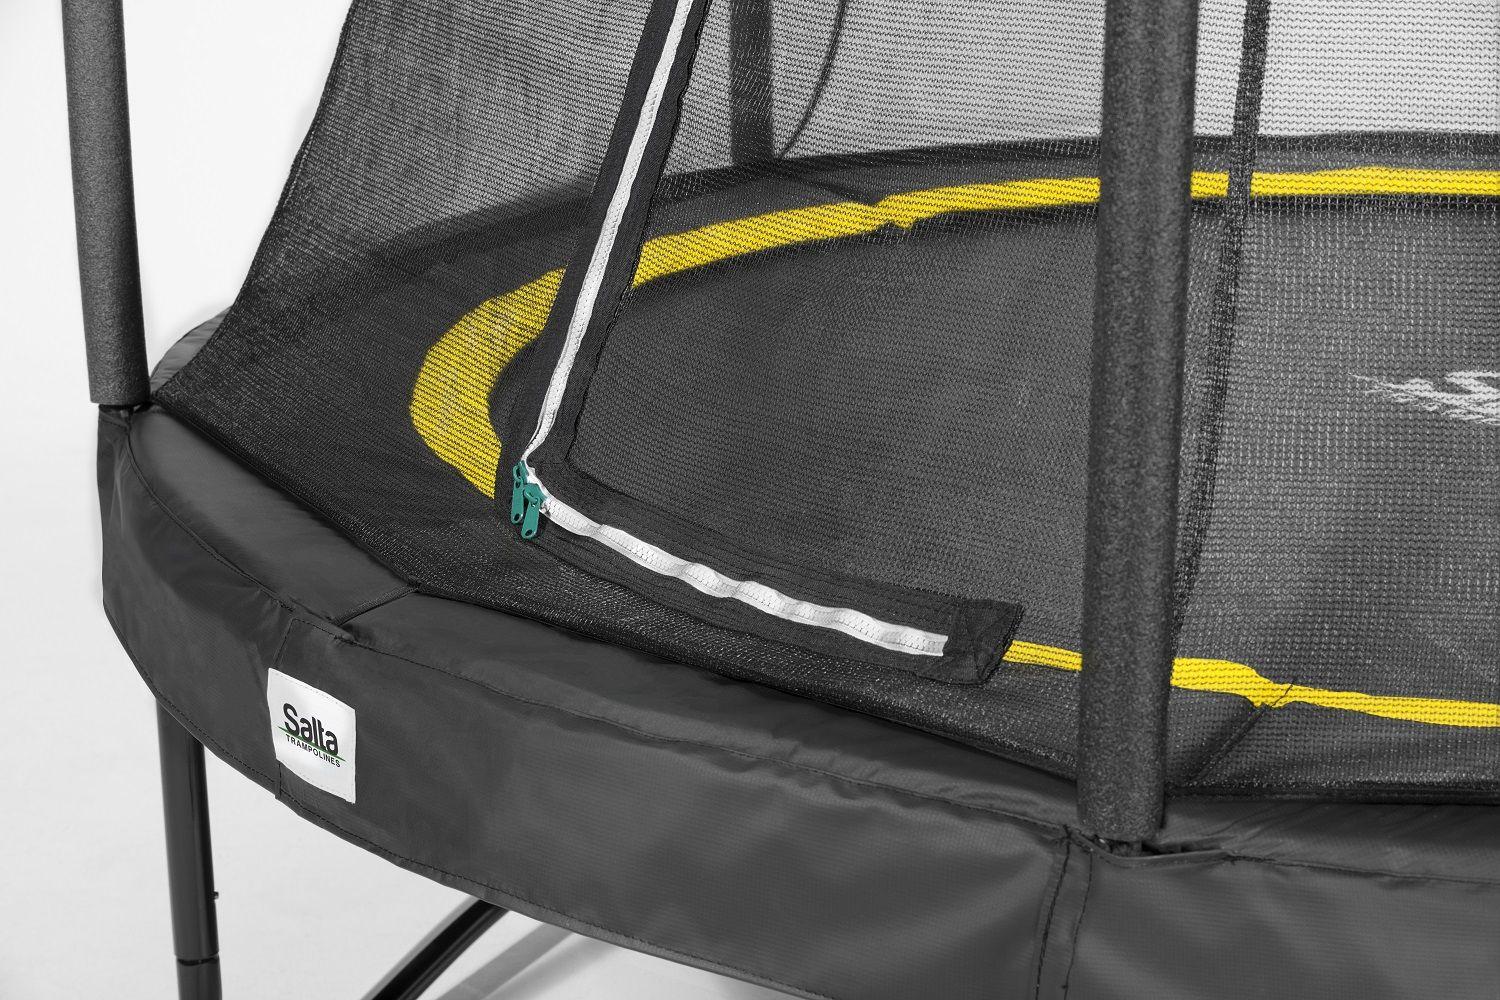 Salta Comfrot edition - 213 cm recreational/backyard trampoline